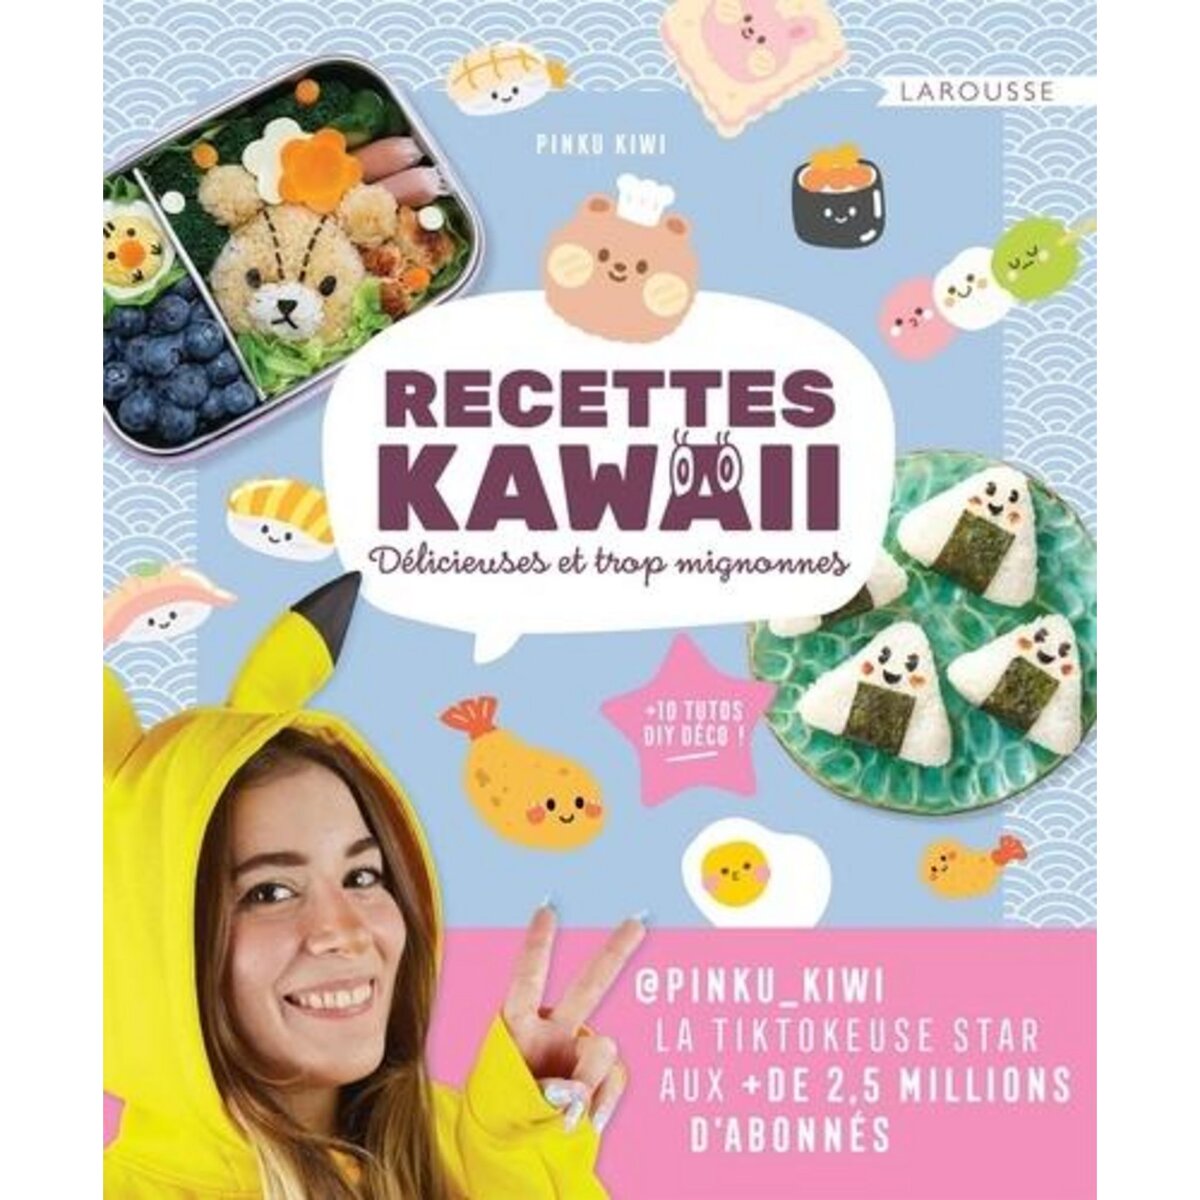 Recettes kawaii : délicieuses et trop mignonnes : + 10 tutos DIY déco ! /  Pinku Kiwi